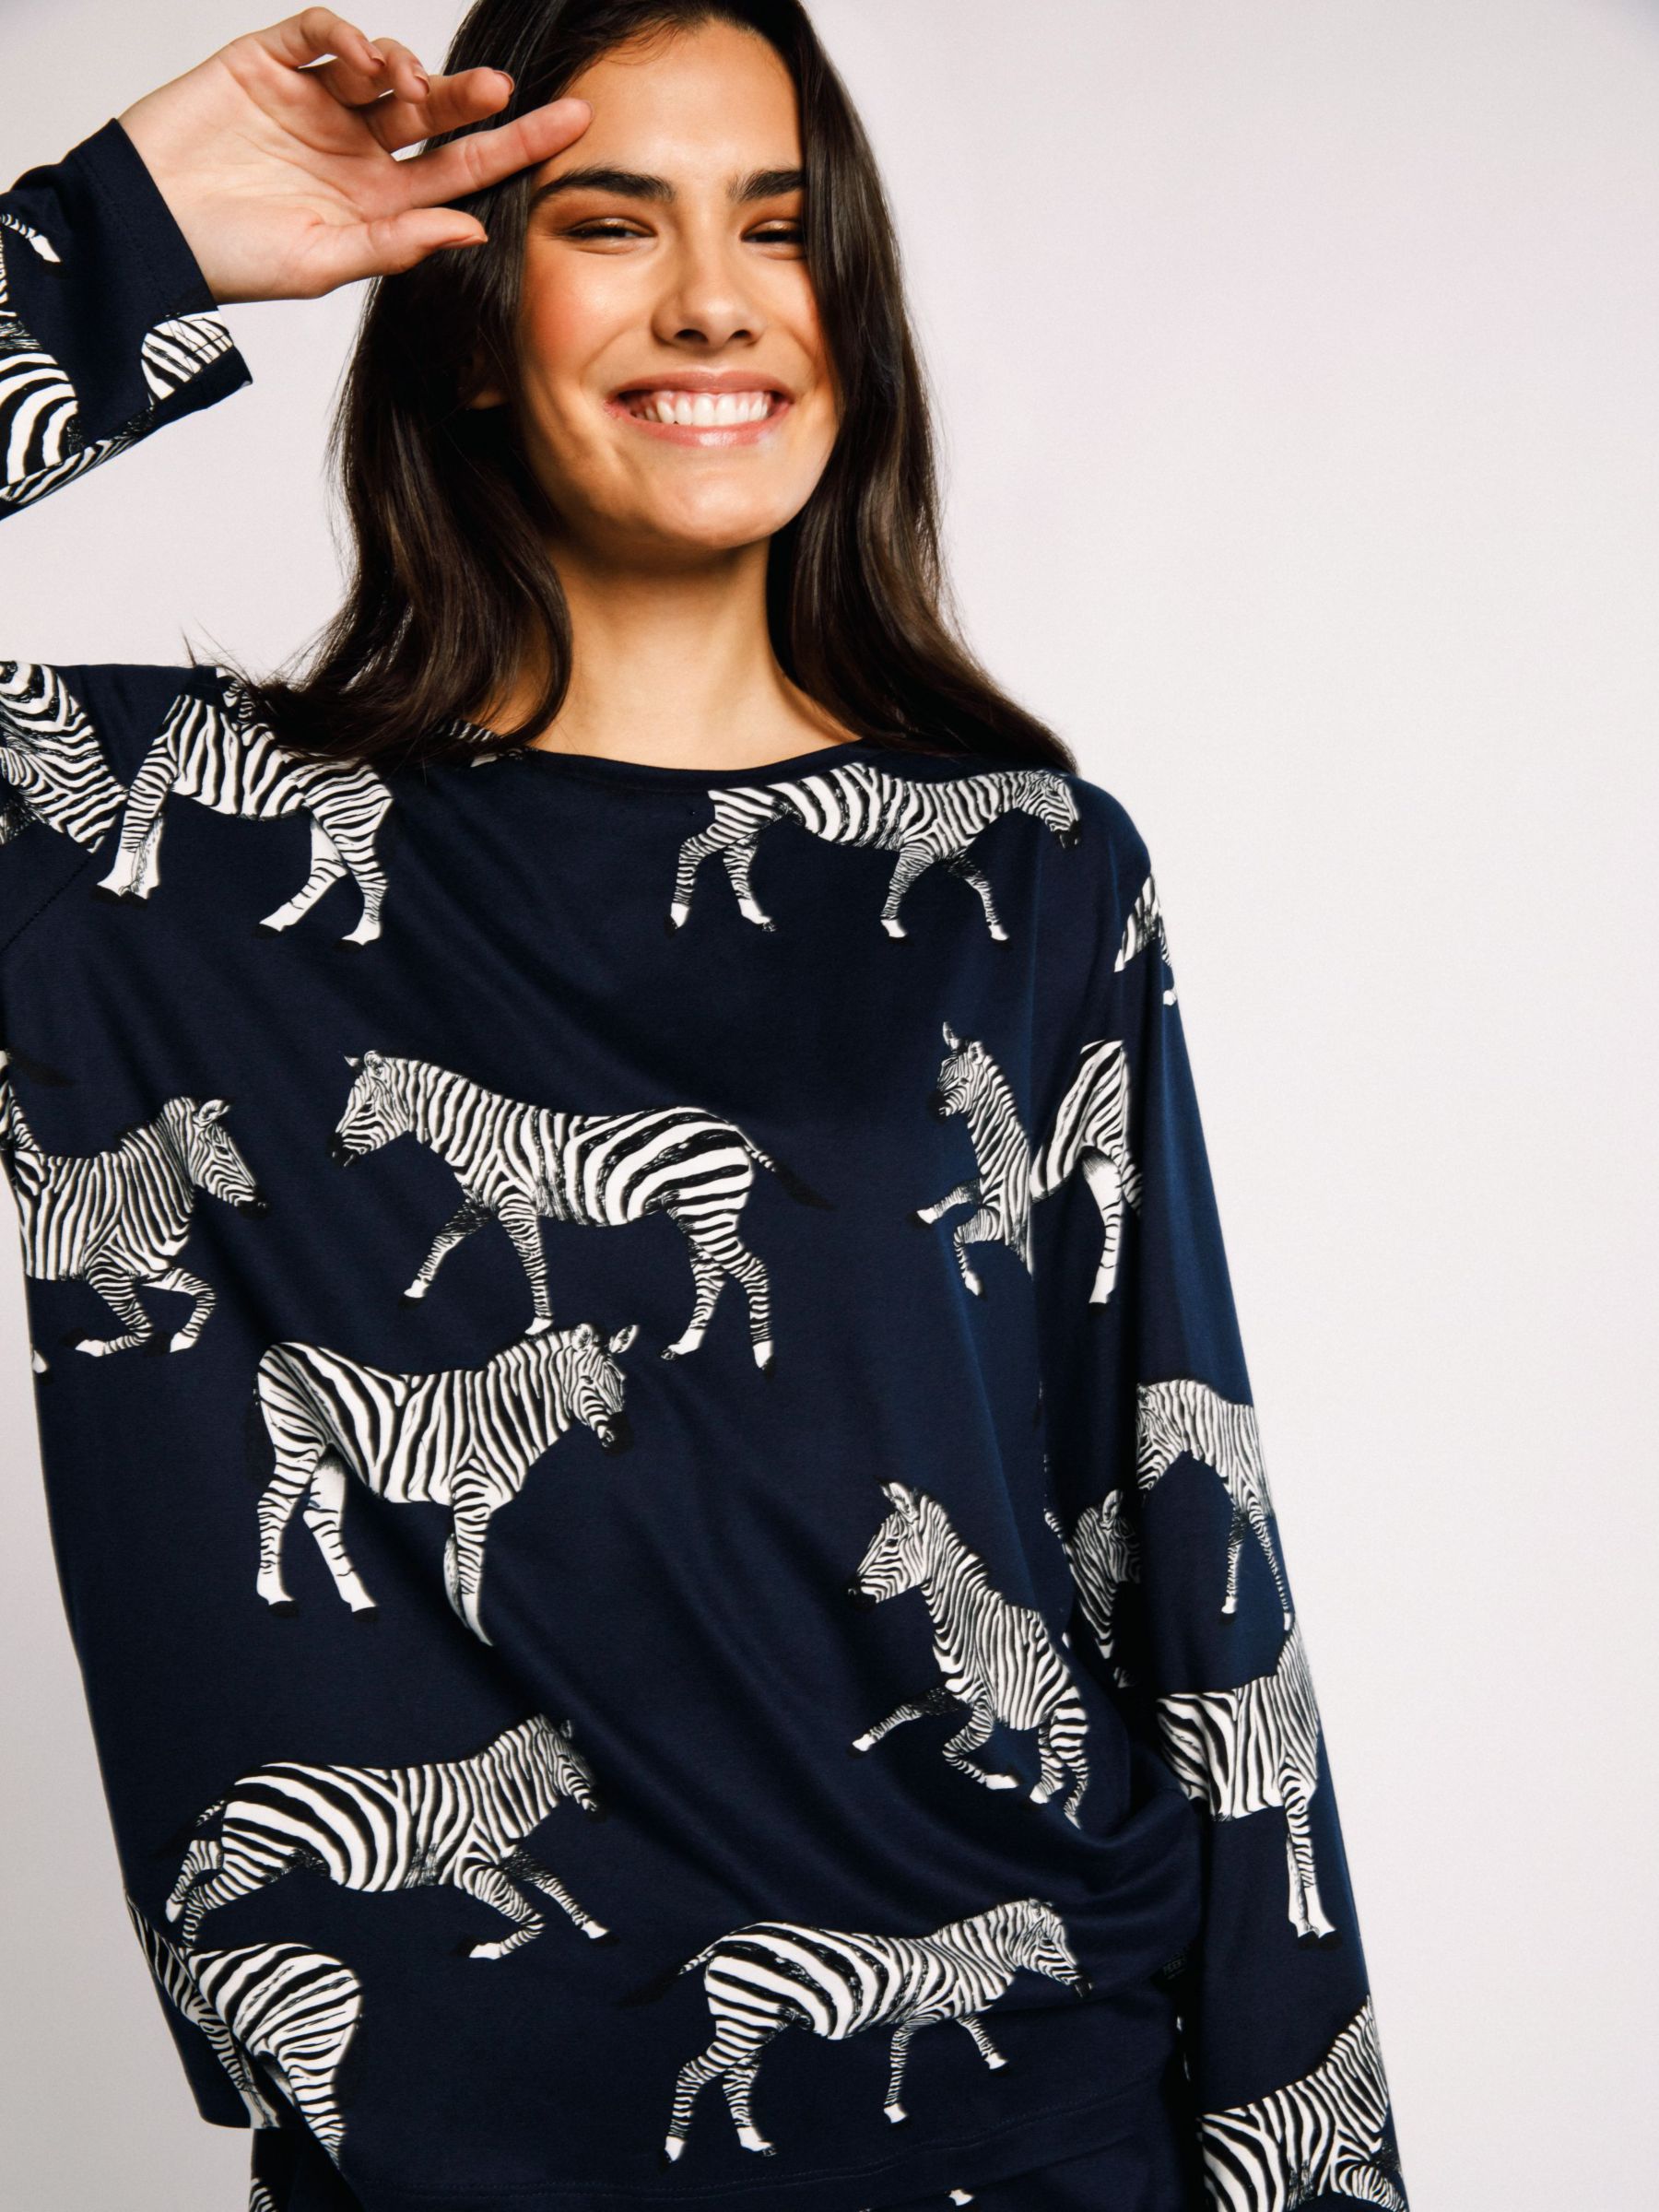 Chelsea Peers Zebra Print Recycled Pyjama Set, Navy/Multi, XS